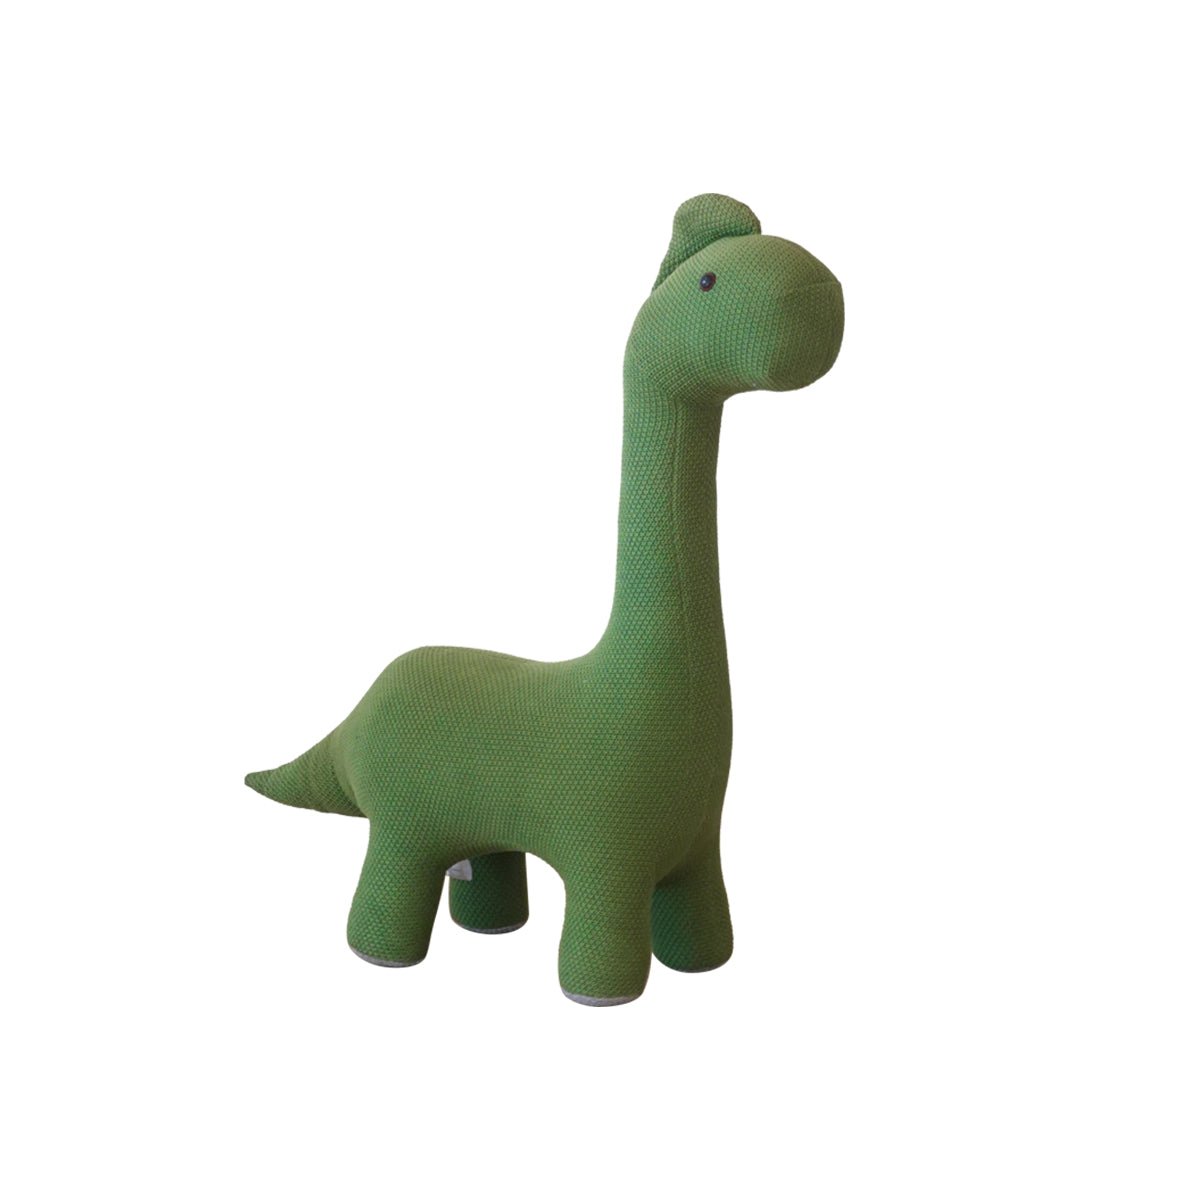 Knitted Green Dinosaur Stool - 0cm